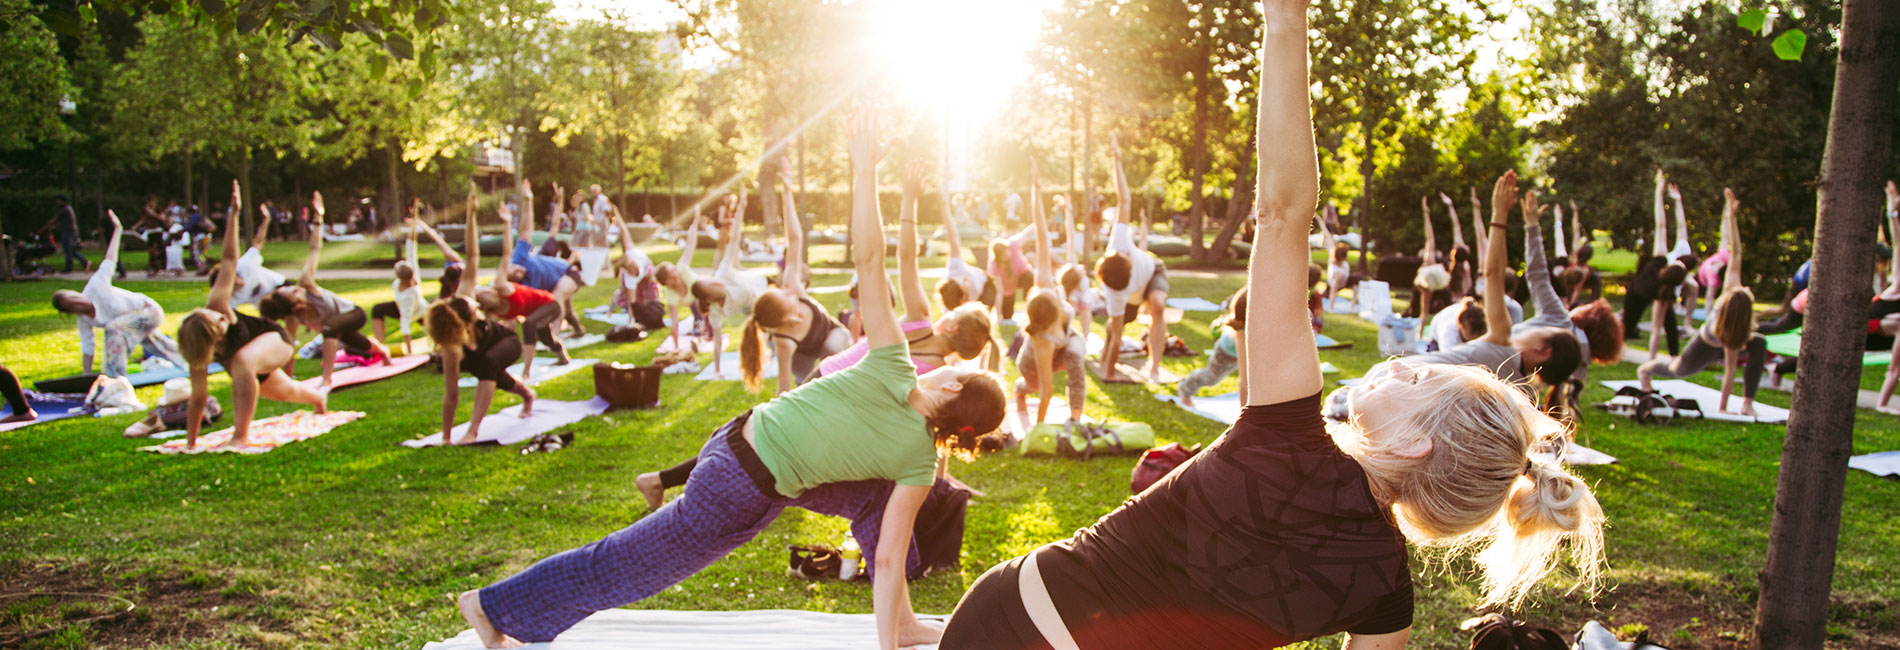 Shutterstock 630816977 Yoga in the park